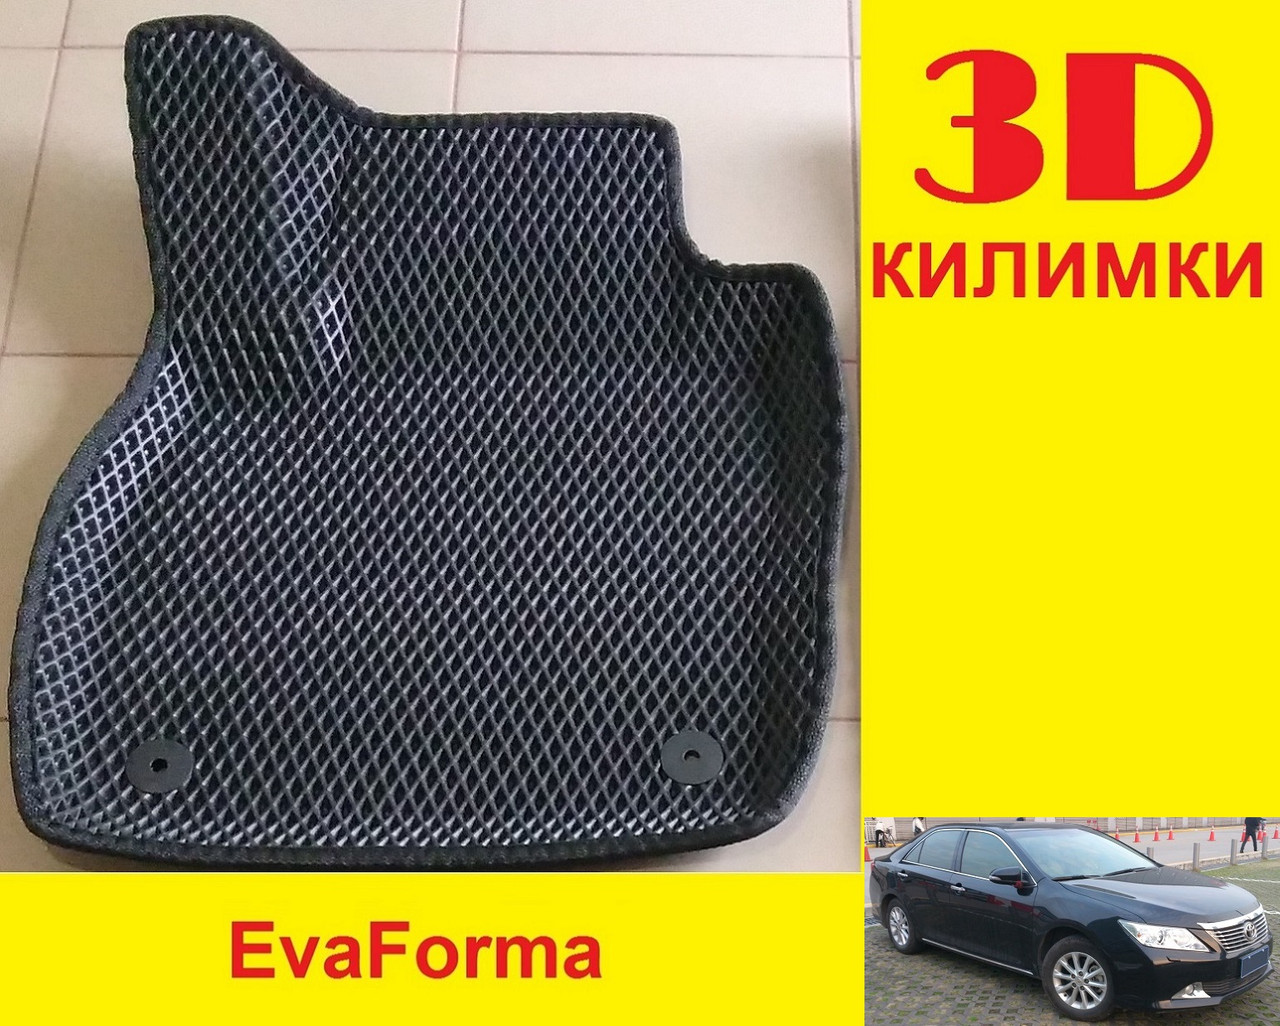 3D килимки EvaForma на Toyota Camry XV50 '11-17, килимки ЕВА